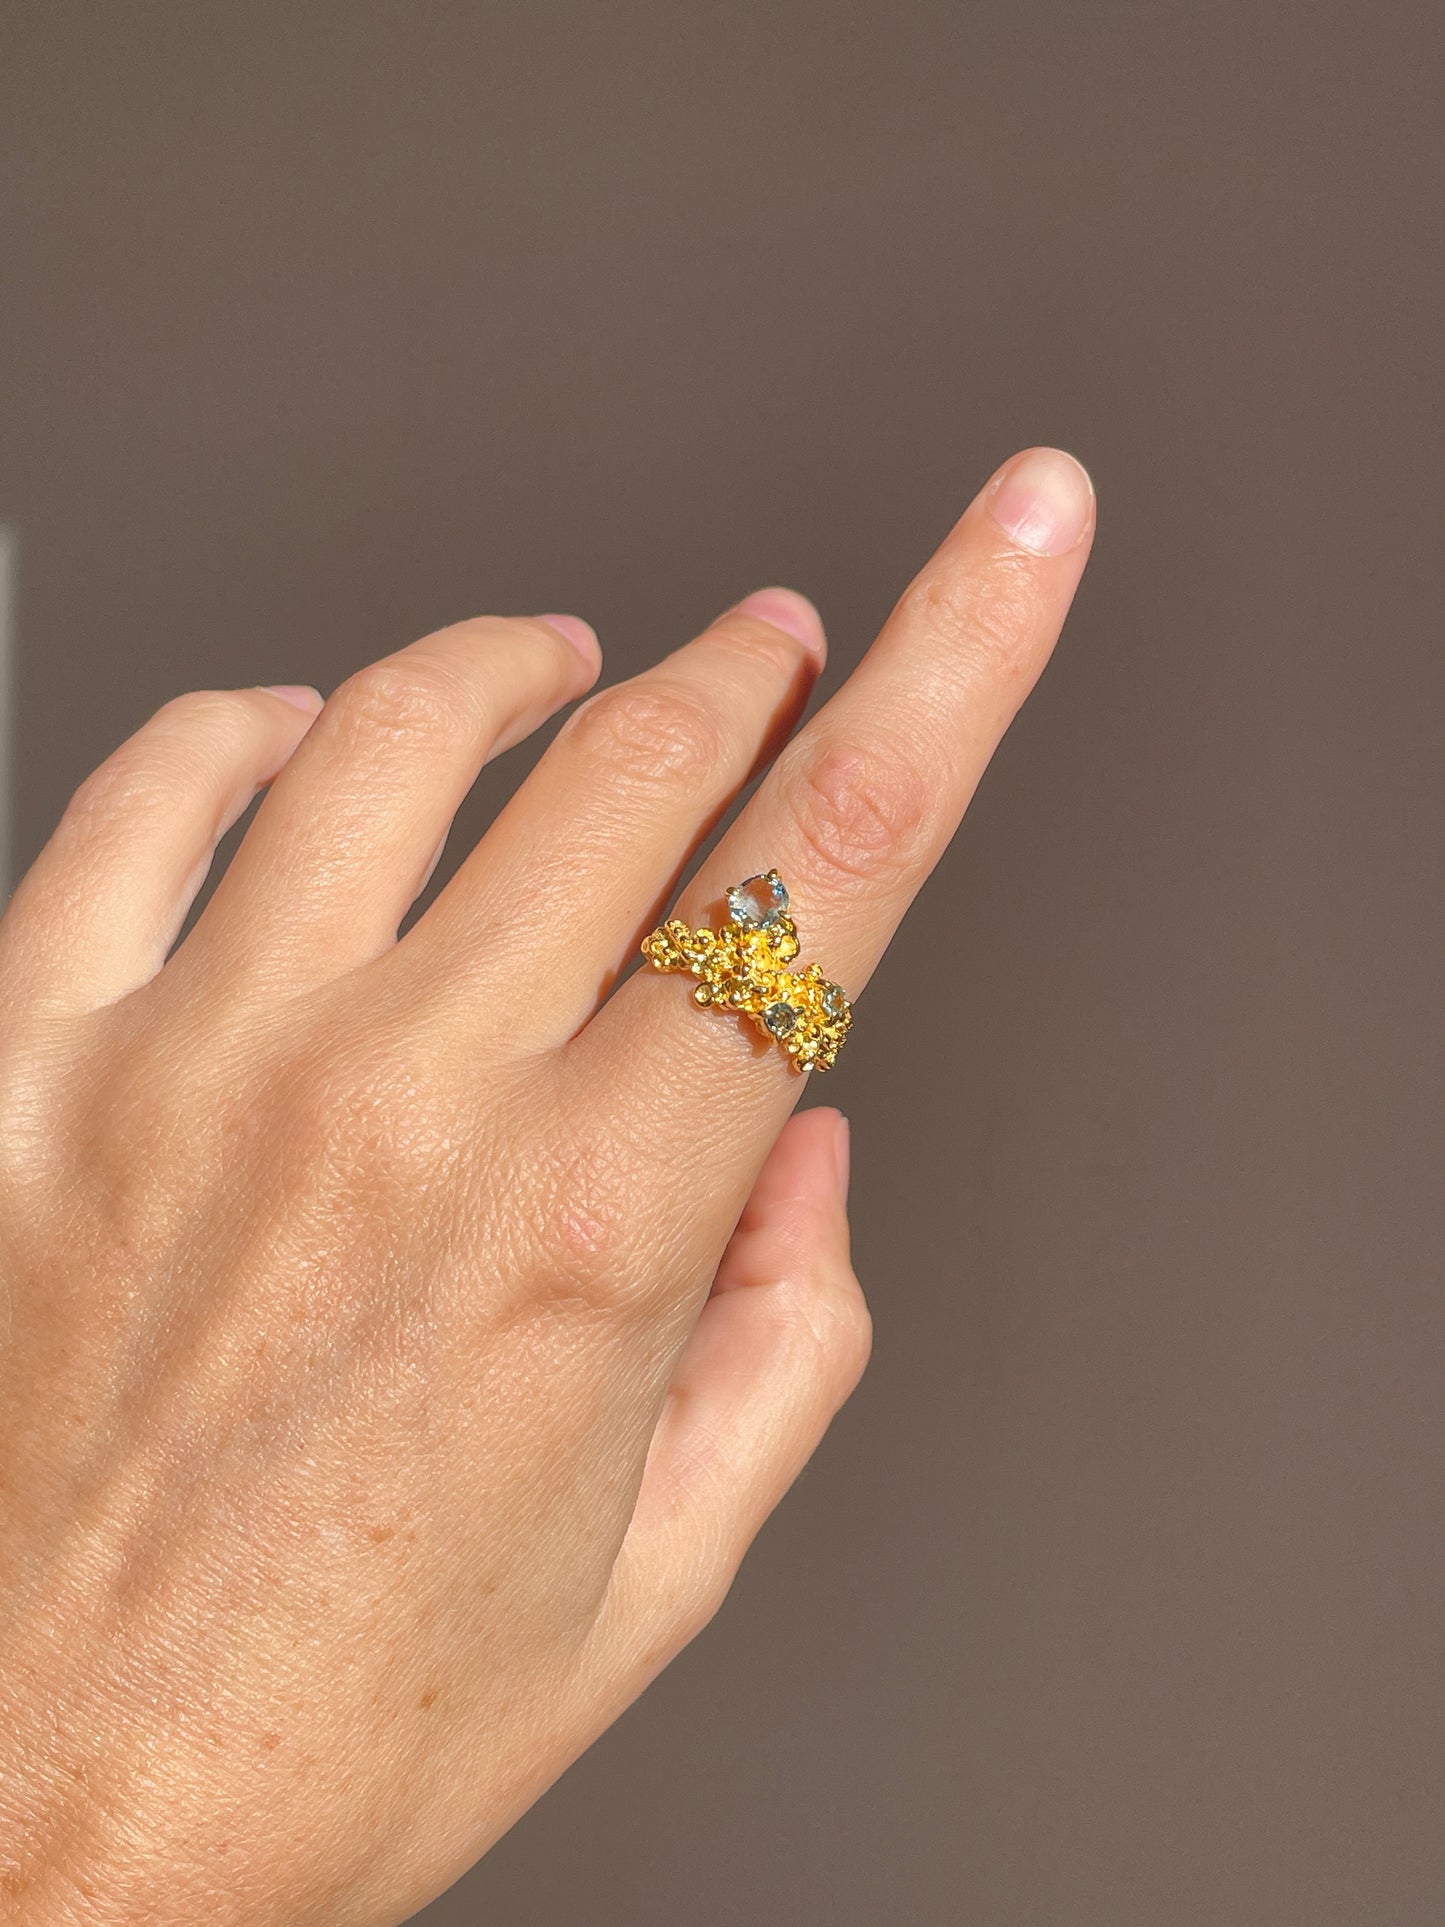 Coral Ring Gold with Aqua coloured sapphires & Aquamarine stones - size 7